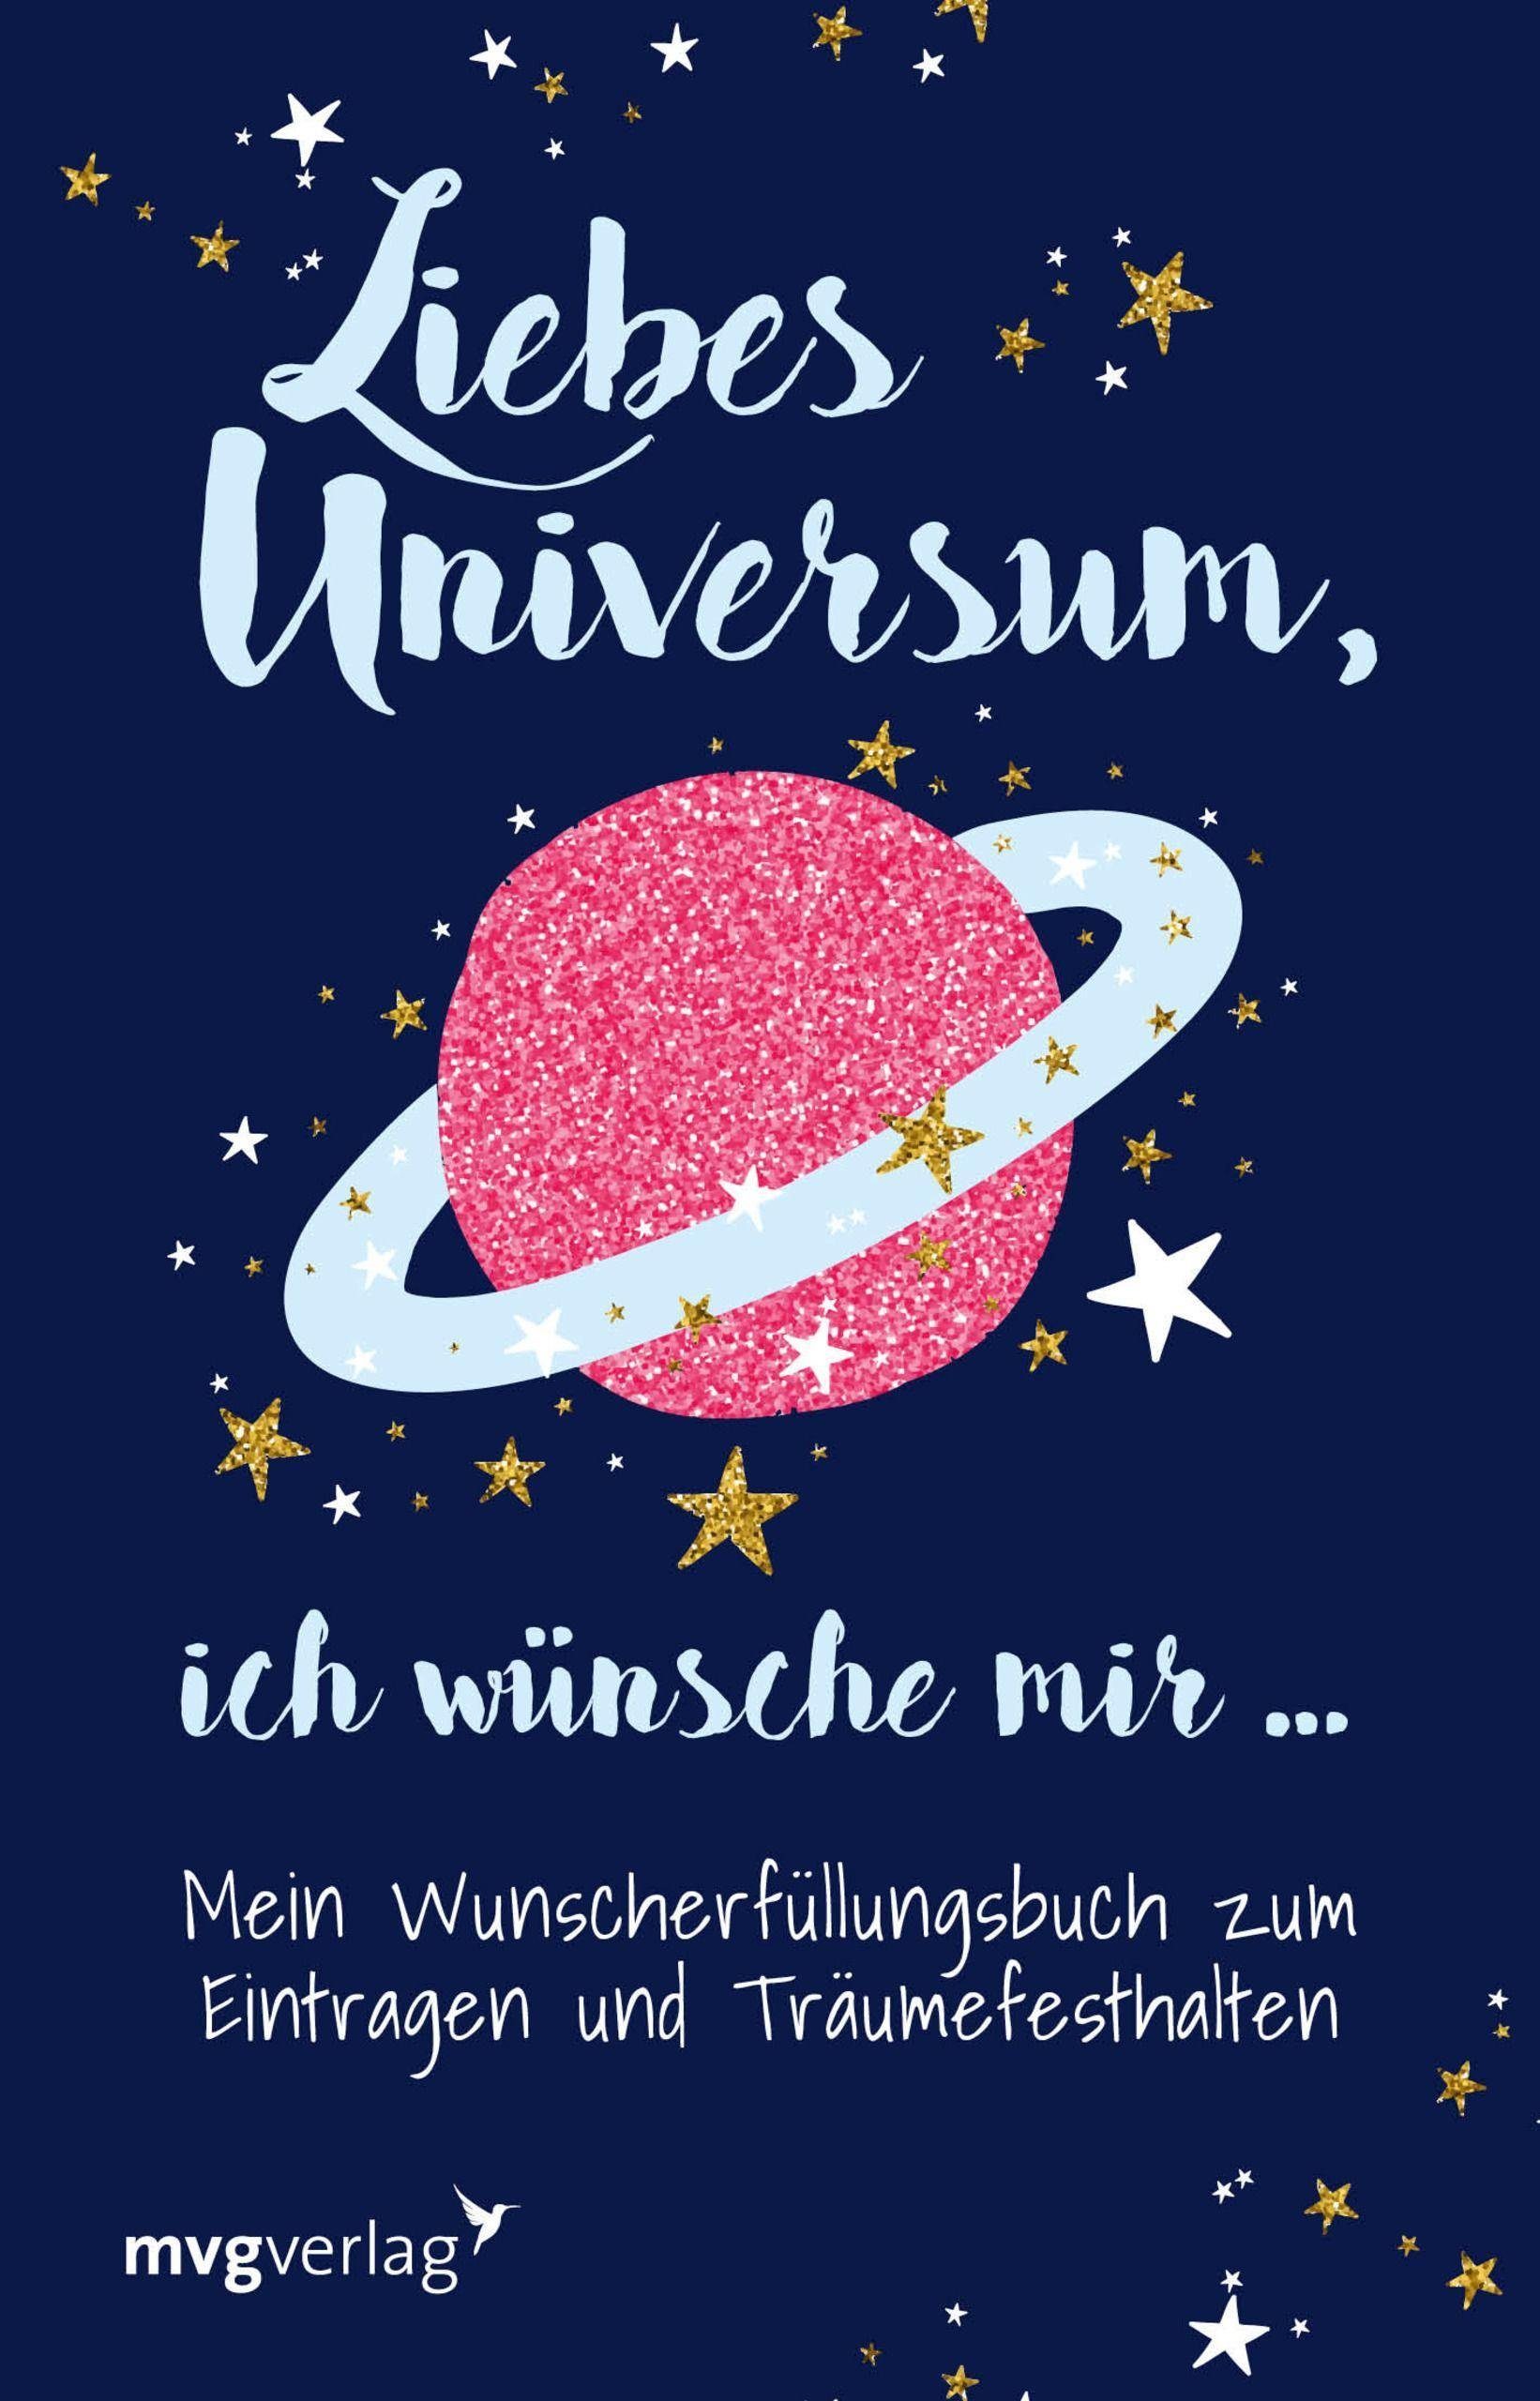 Münchner Verlagsgruppe Notizbuch Liebes Universum, ich wünsche mir ...